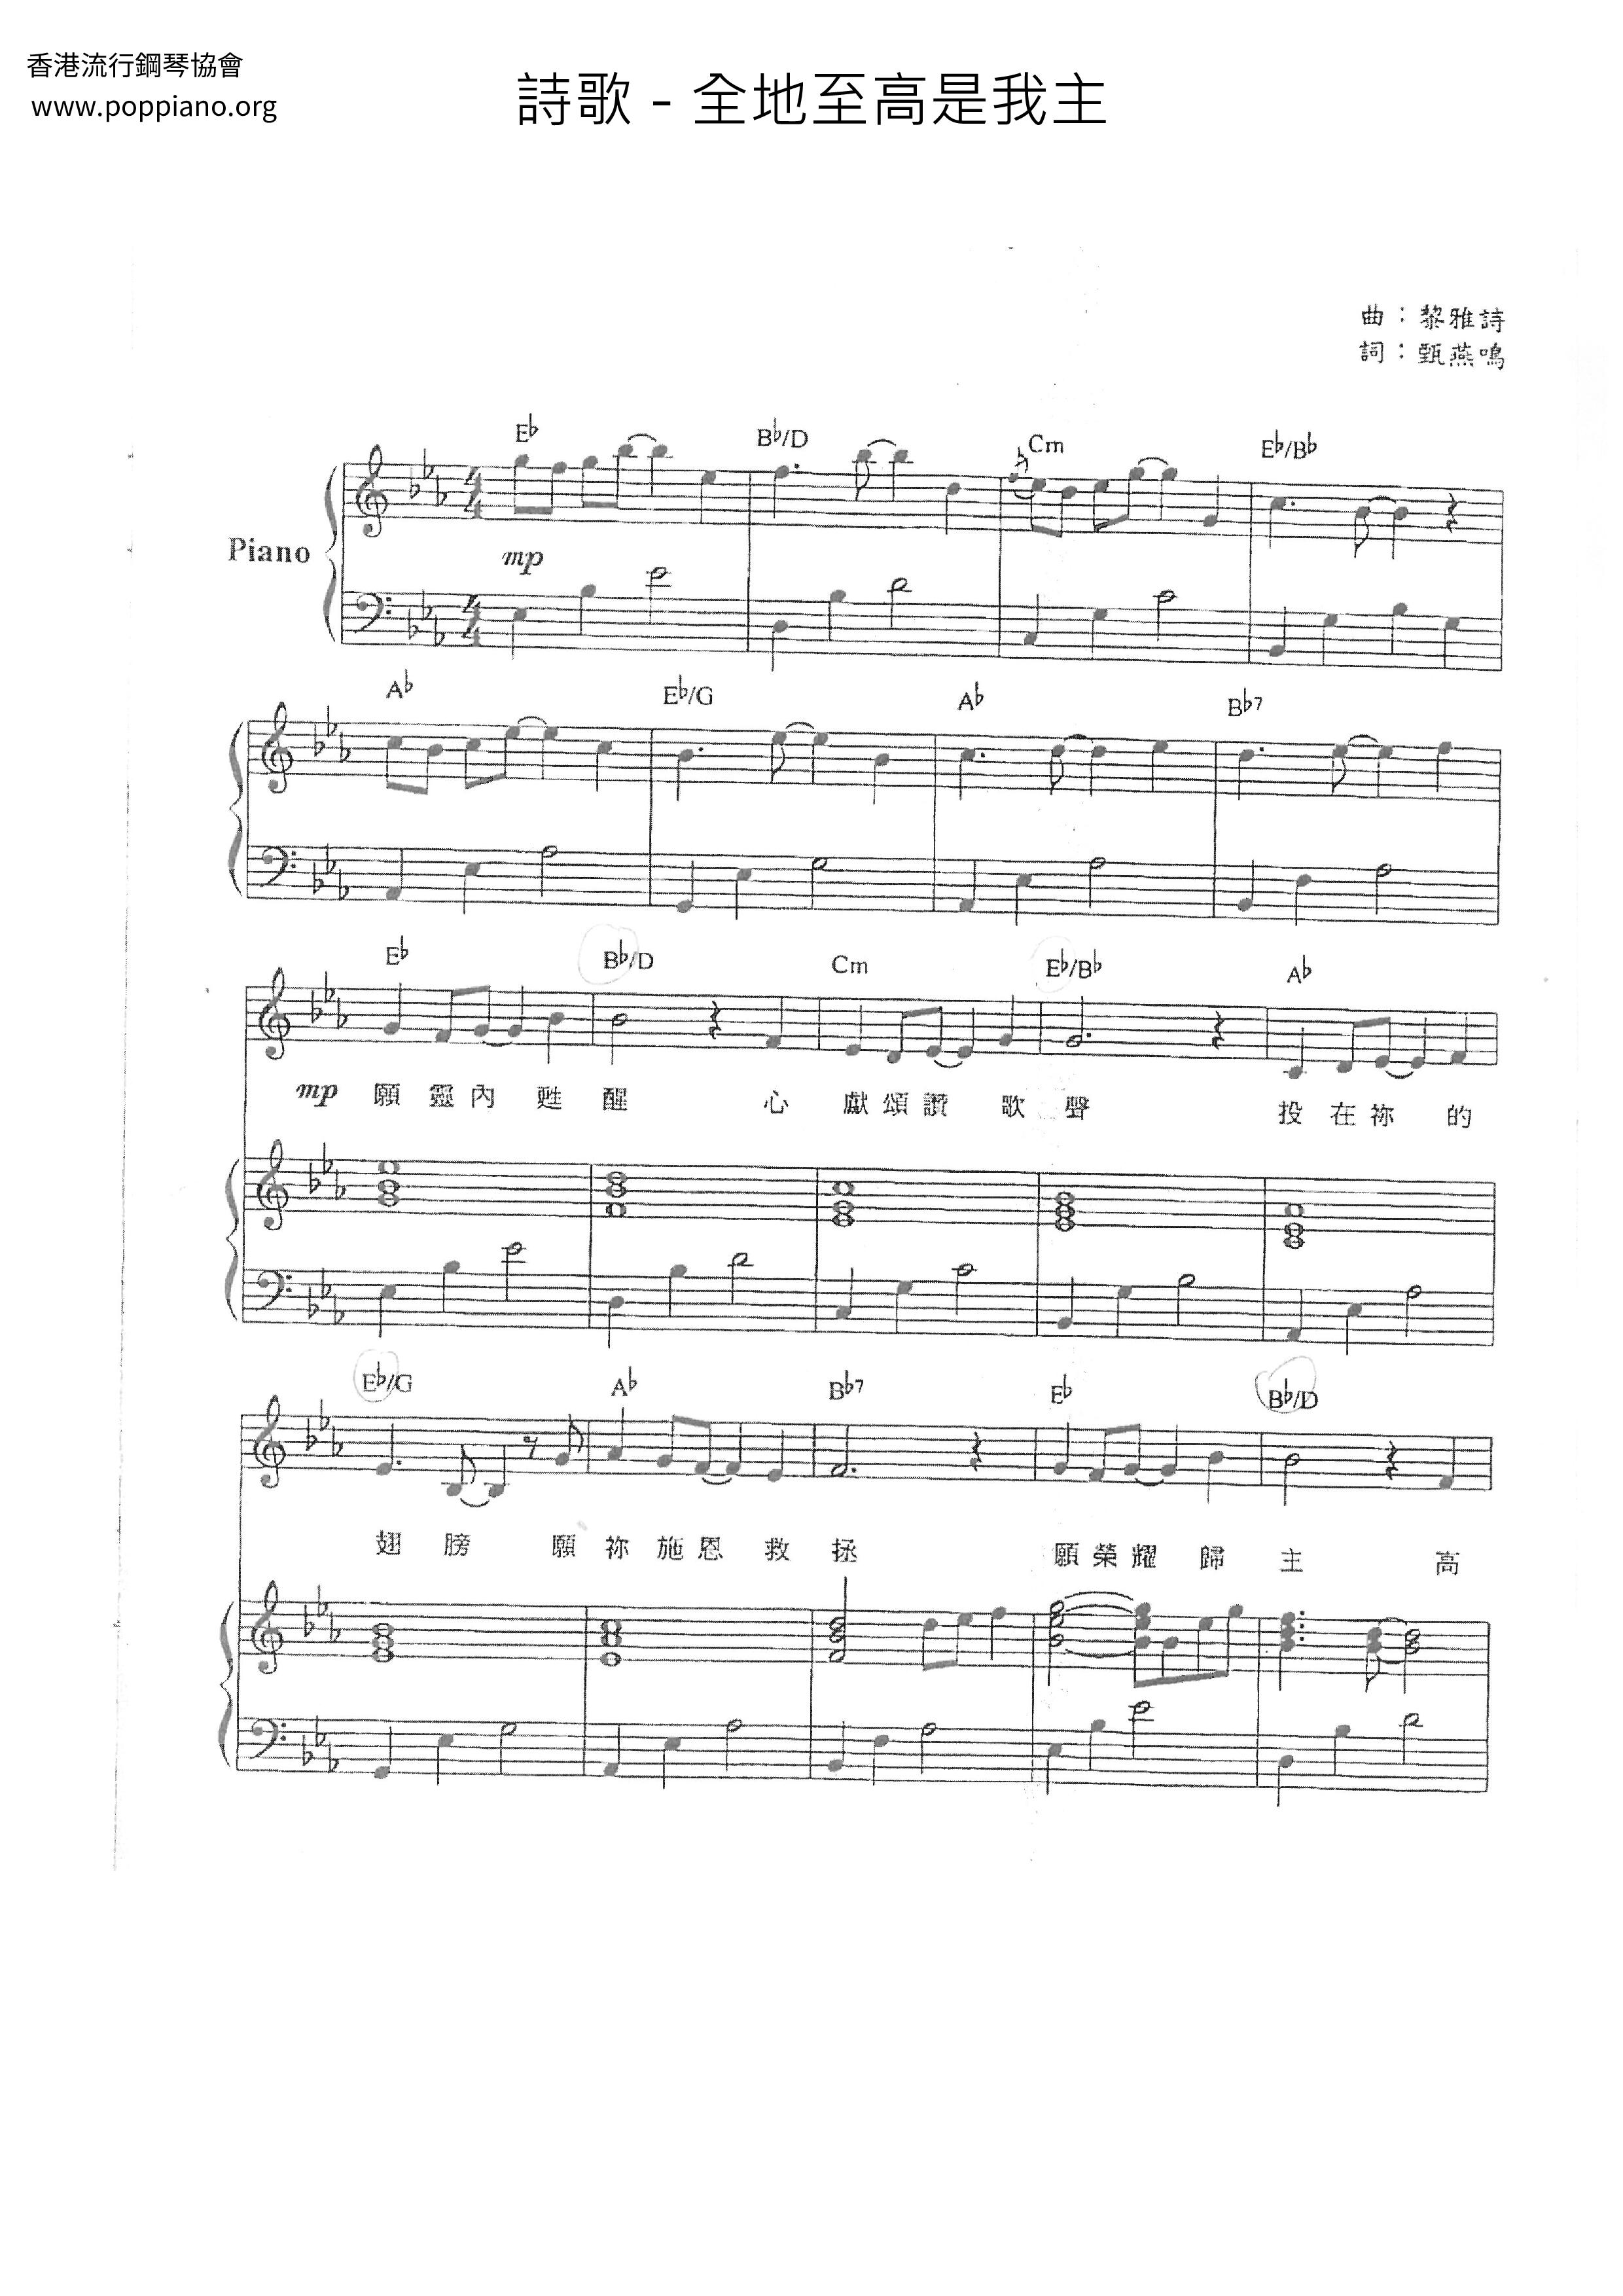 ☆ 全地至高是我主All Versions - Sheet Music / Piano Score Free PDF 